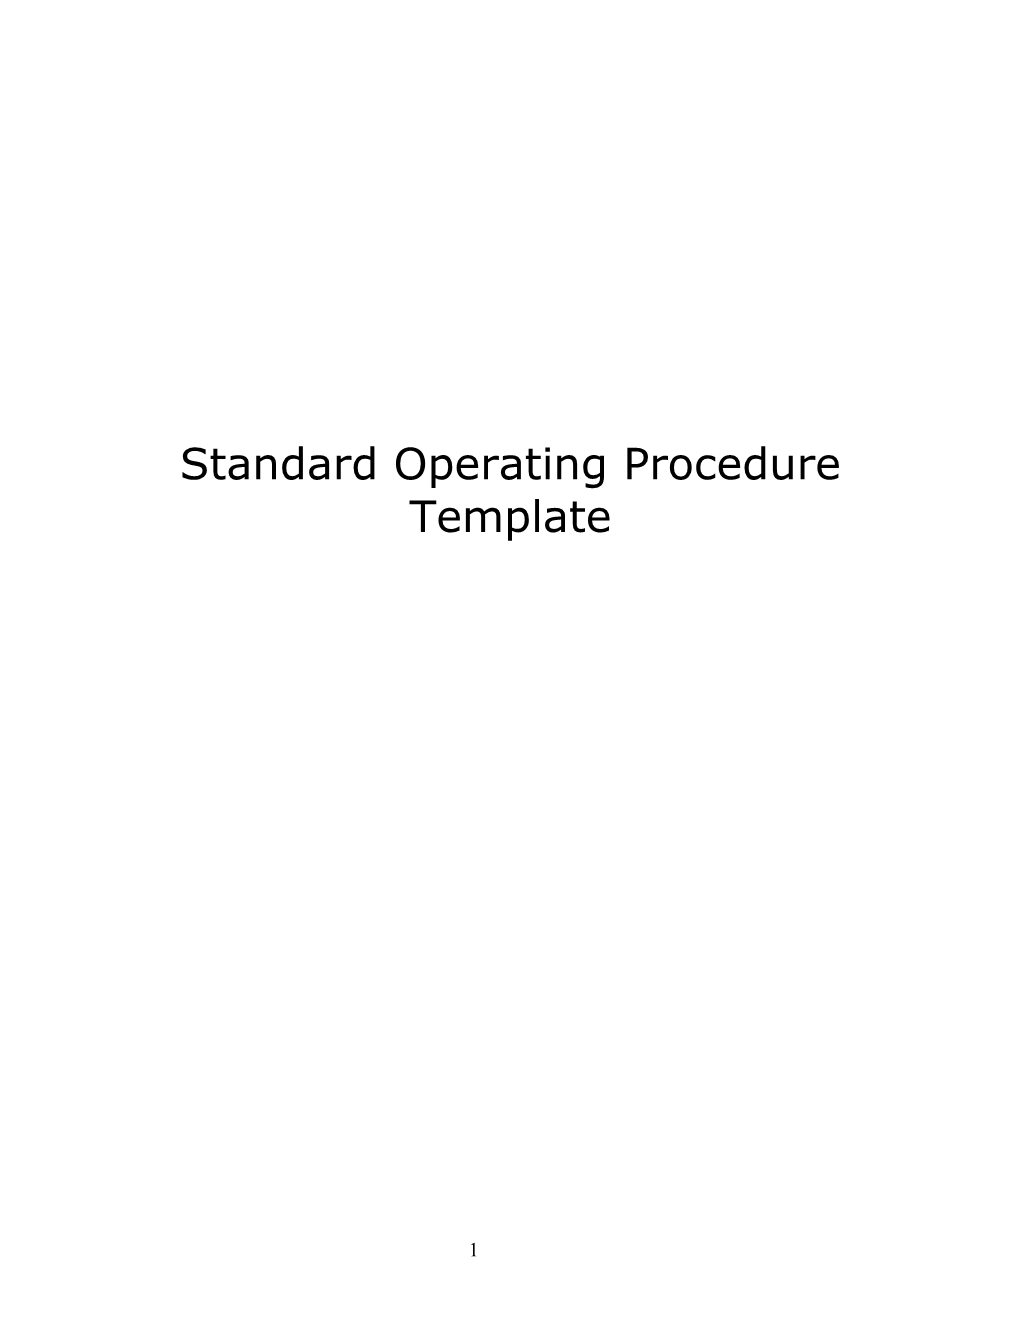 Segway Standard Operating Procedureoverview